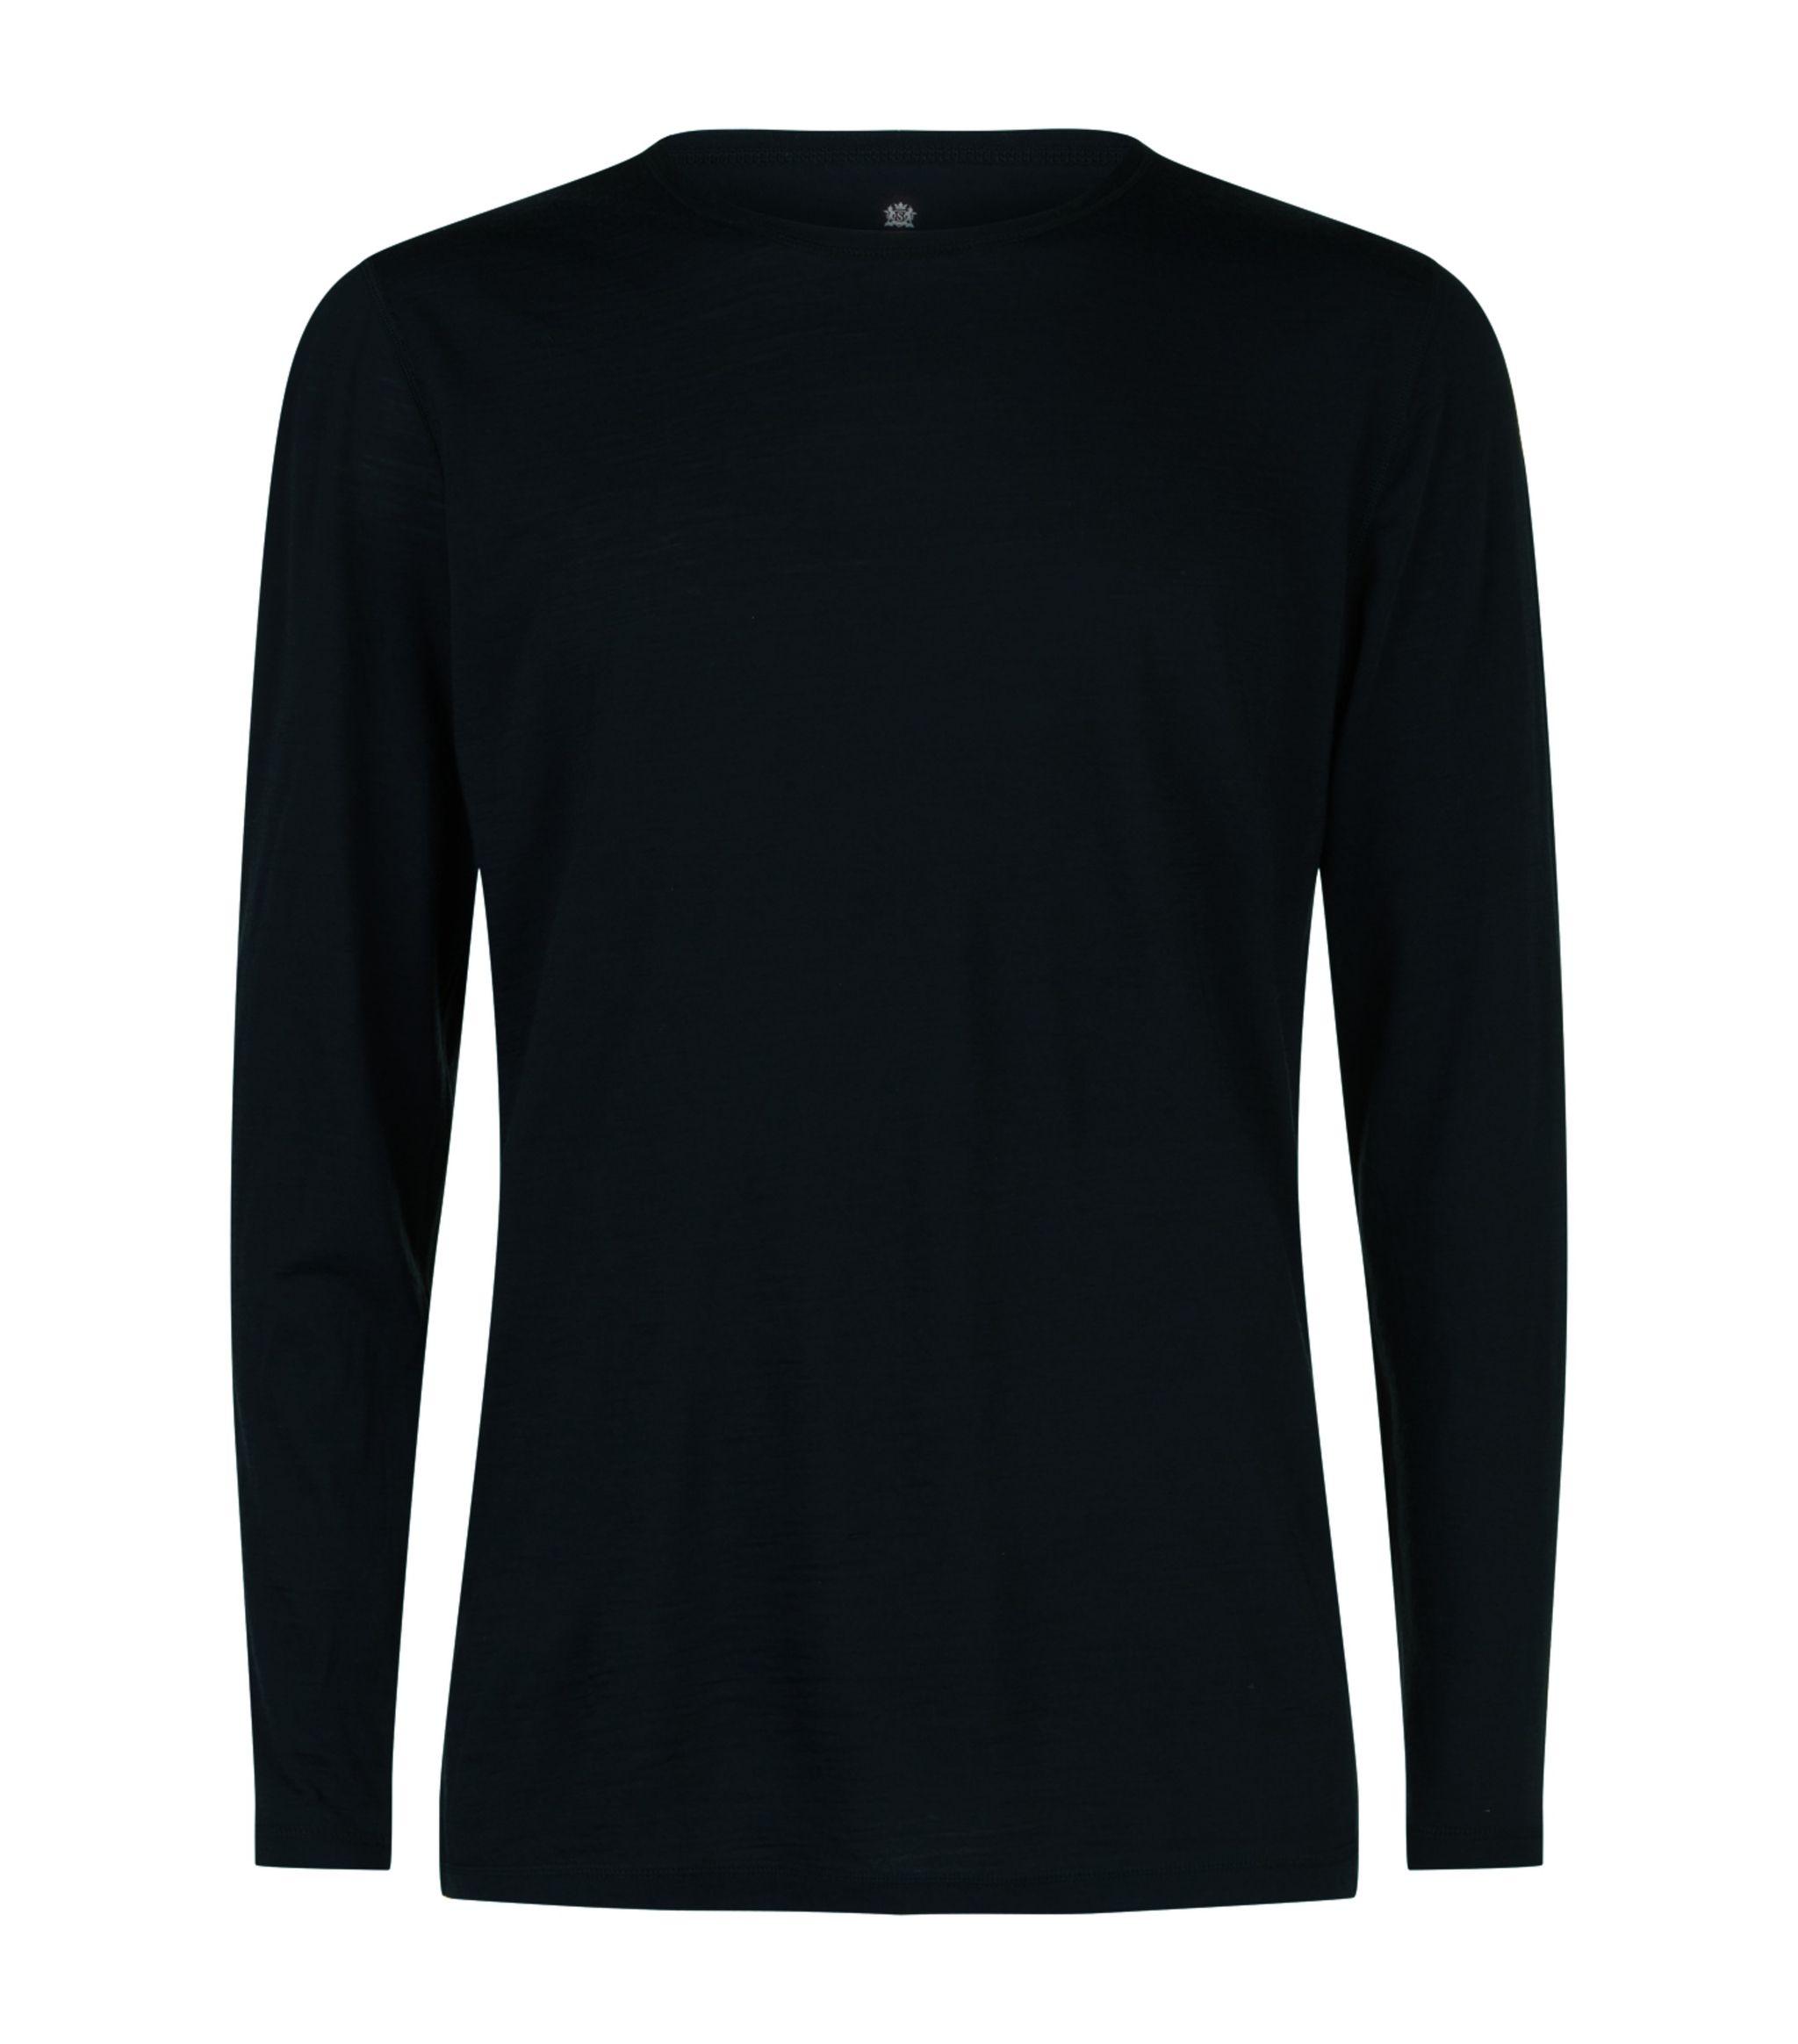 Sunspel Merino Wool Long Sleeve T-shirt in Black for Men - Save 7% - Lyst